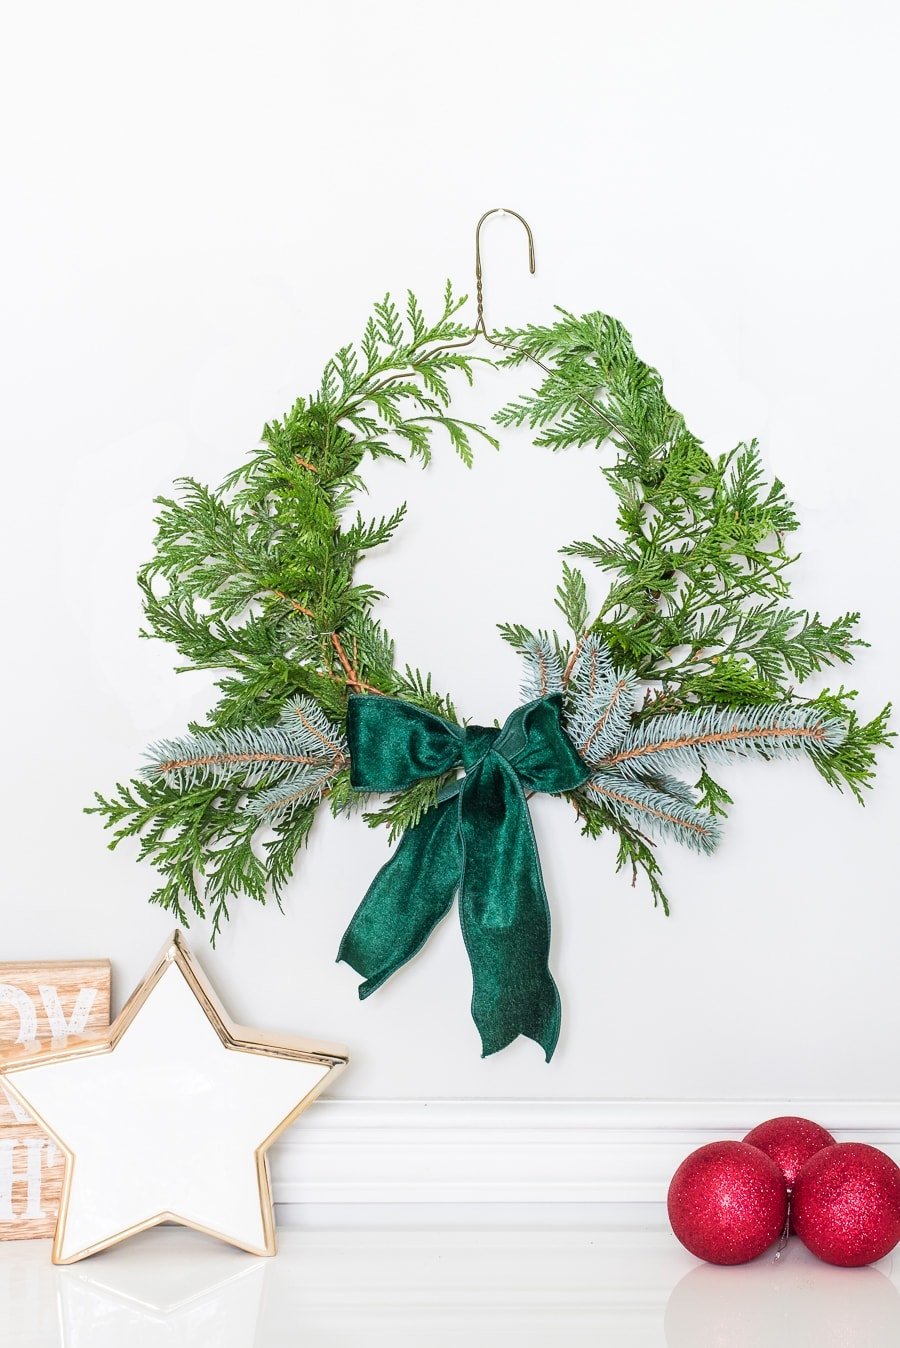 https://jennakateathome.com/wp-content/uploads/2018/11/christmas-wreath-using-wire-hanger-nowm.jpg